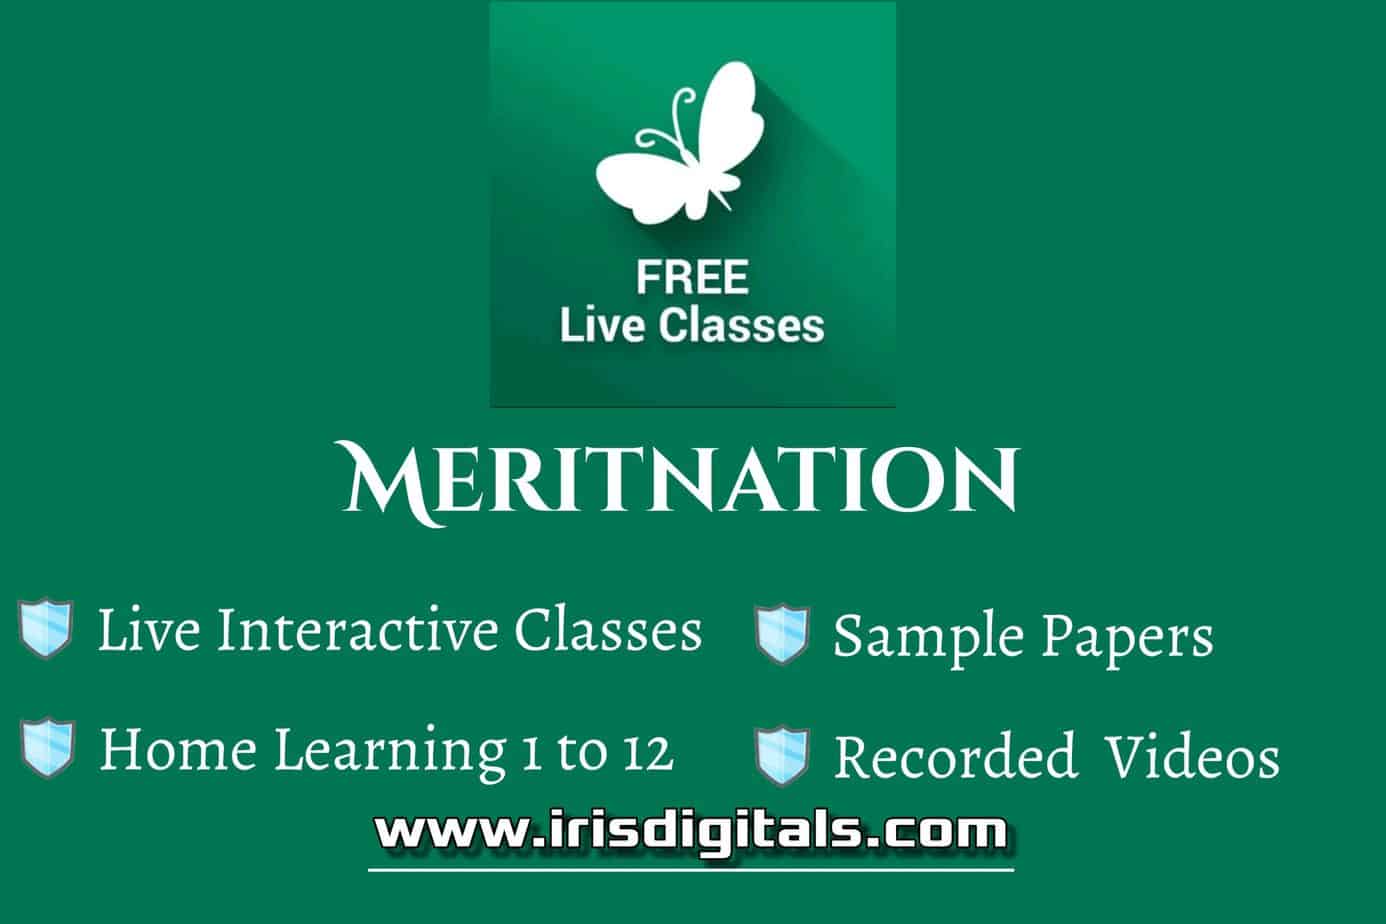 Meritnation Free Live Classe